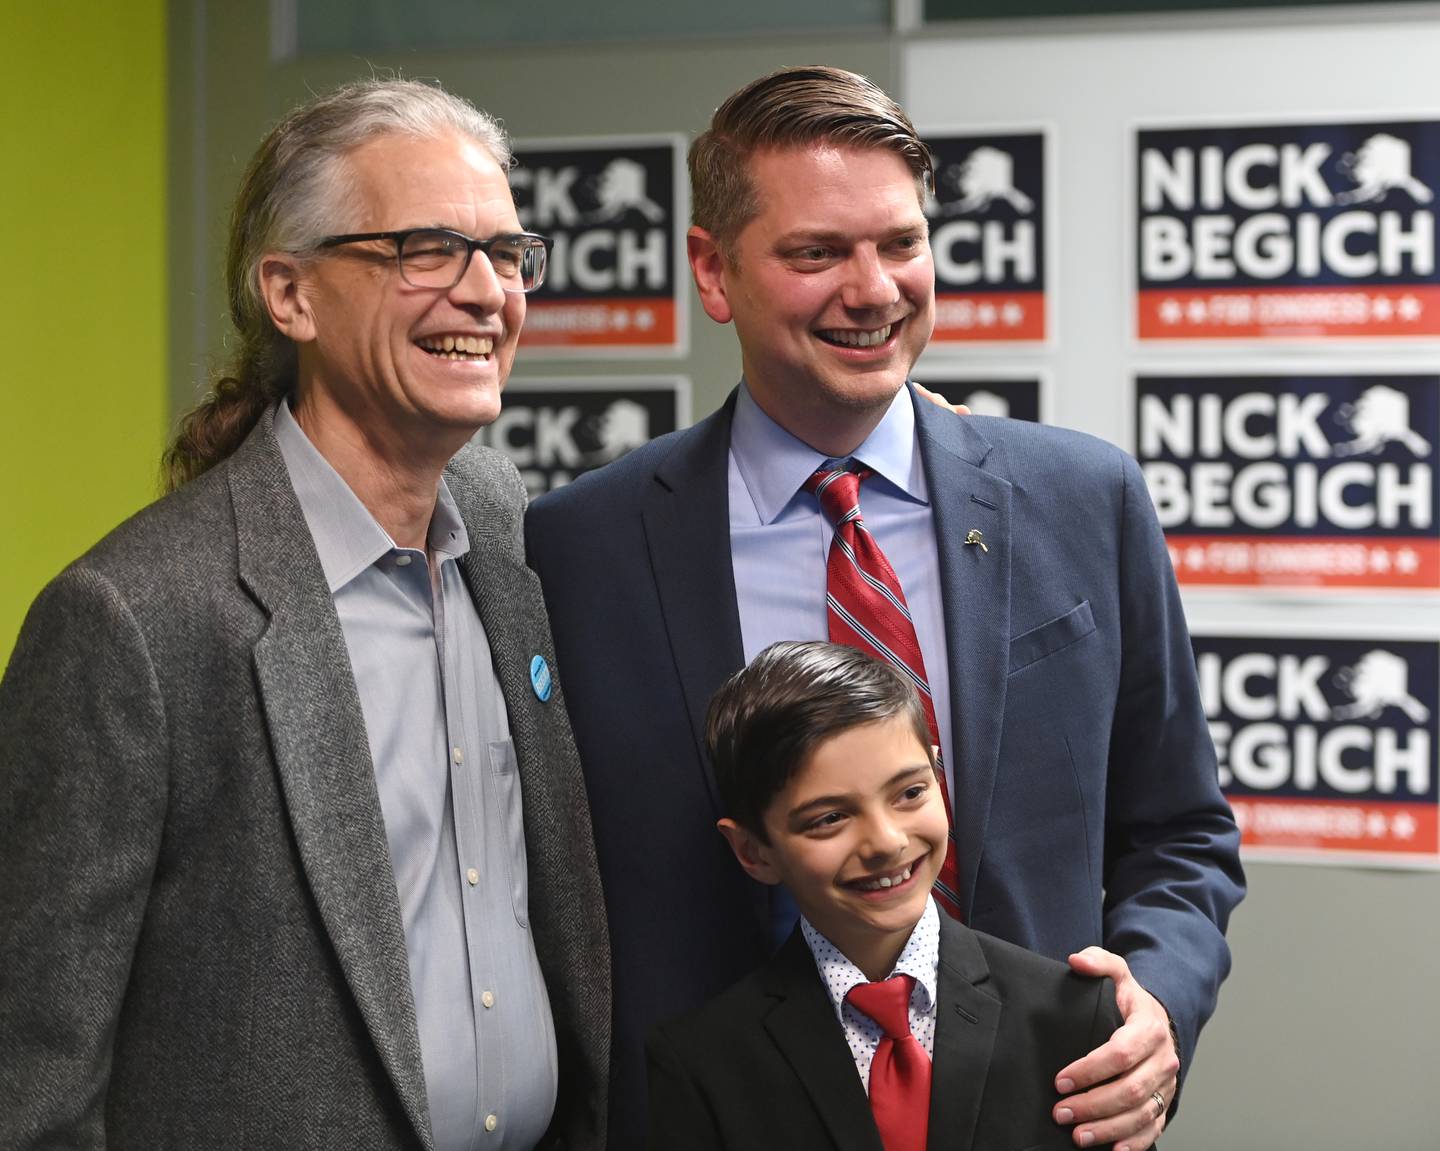 U.S. House candidate Nick Begich